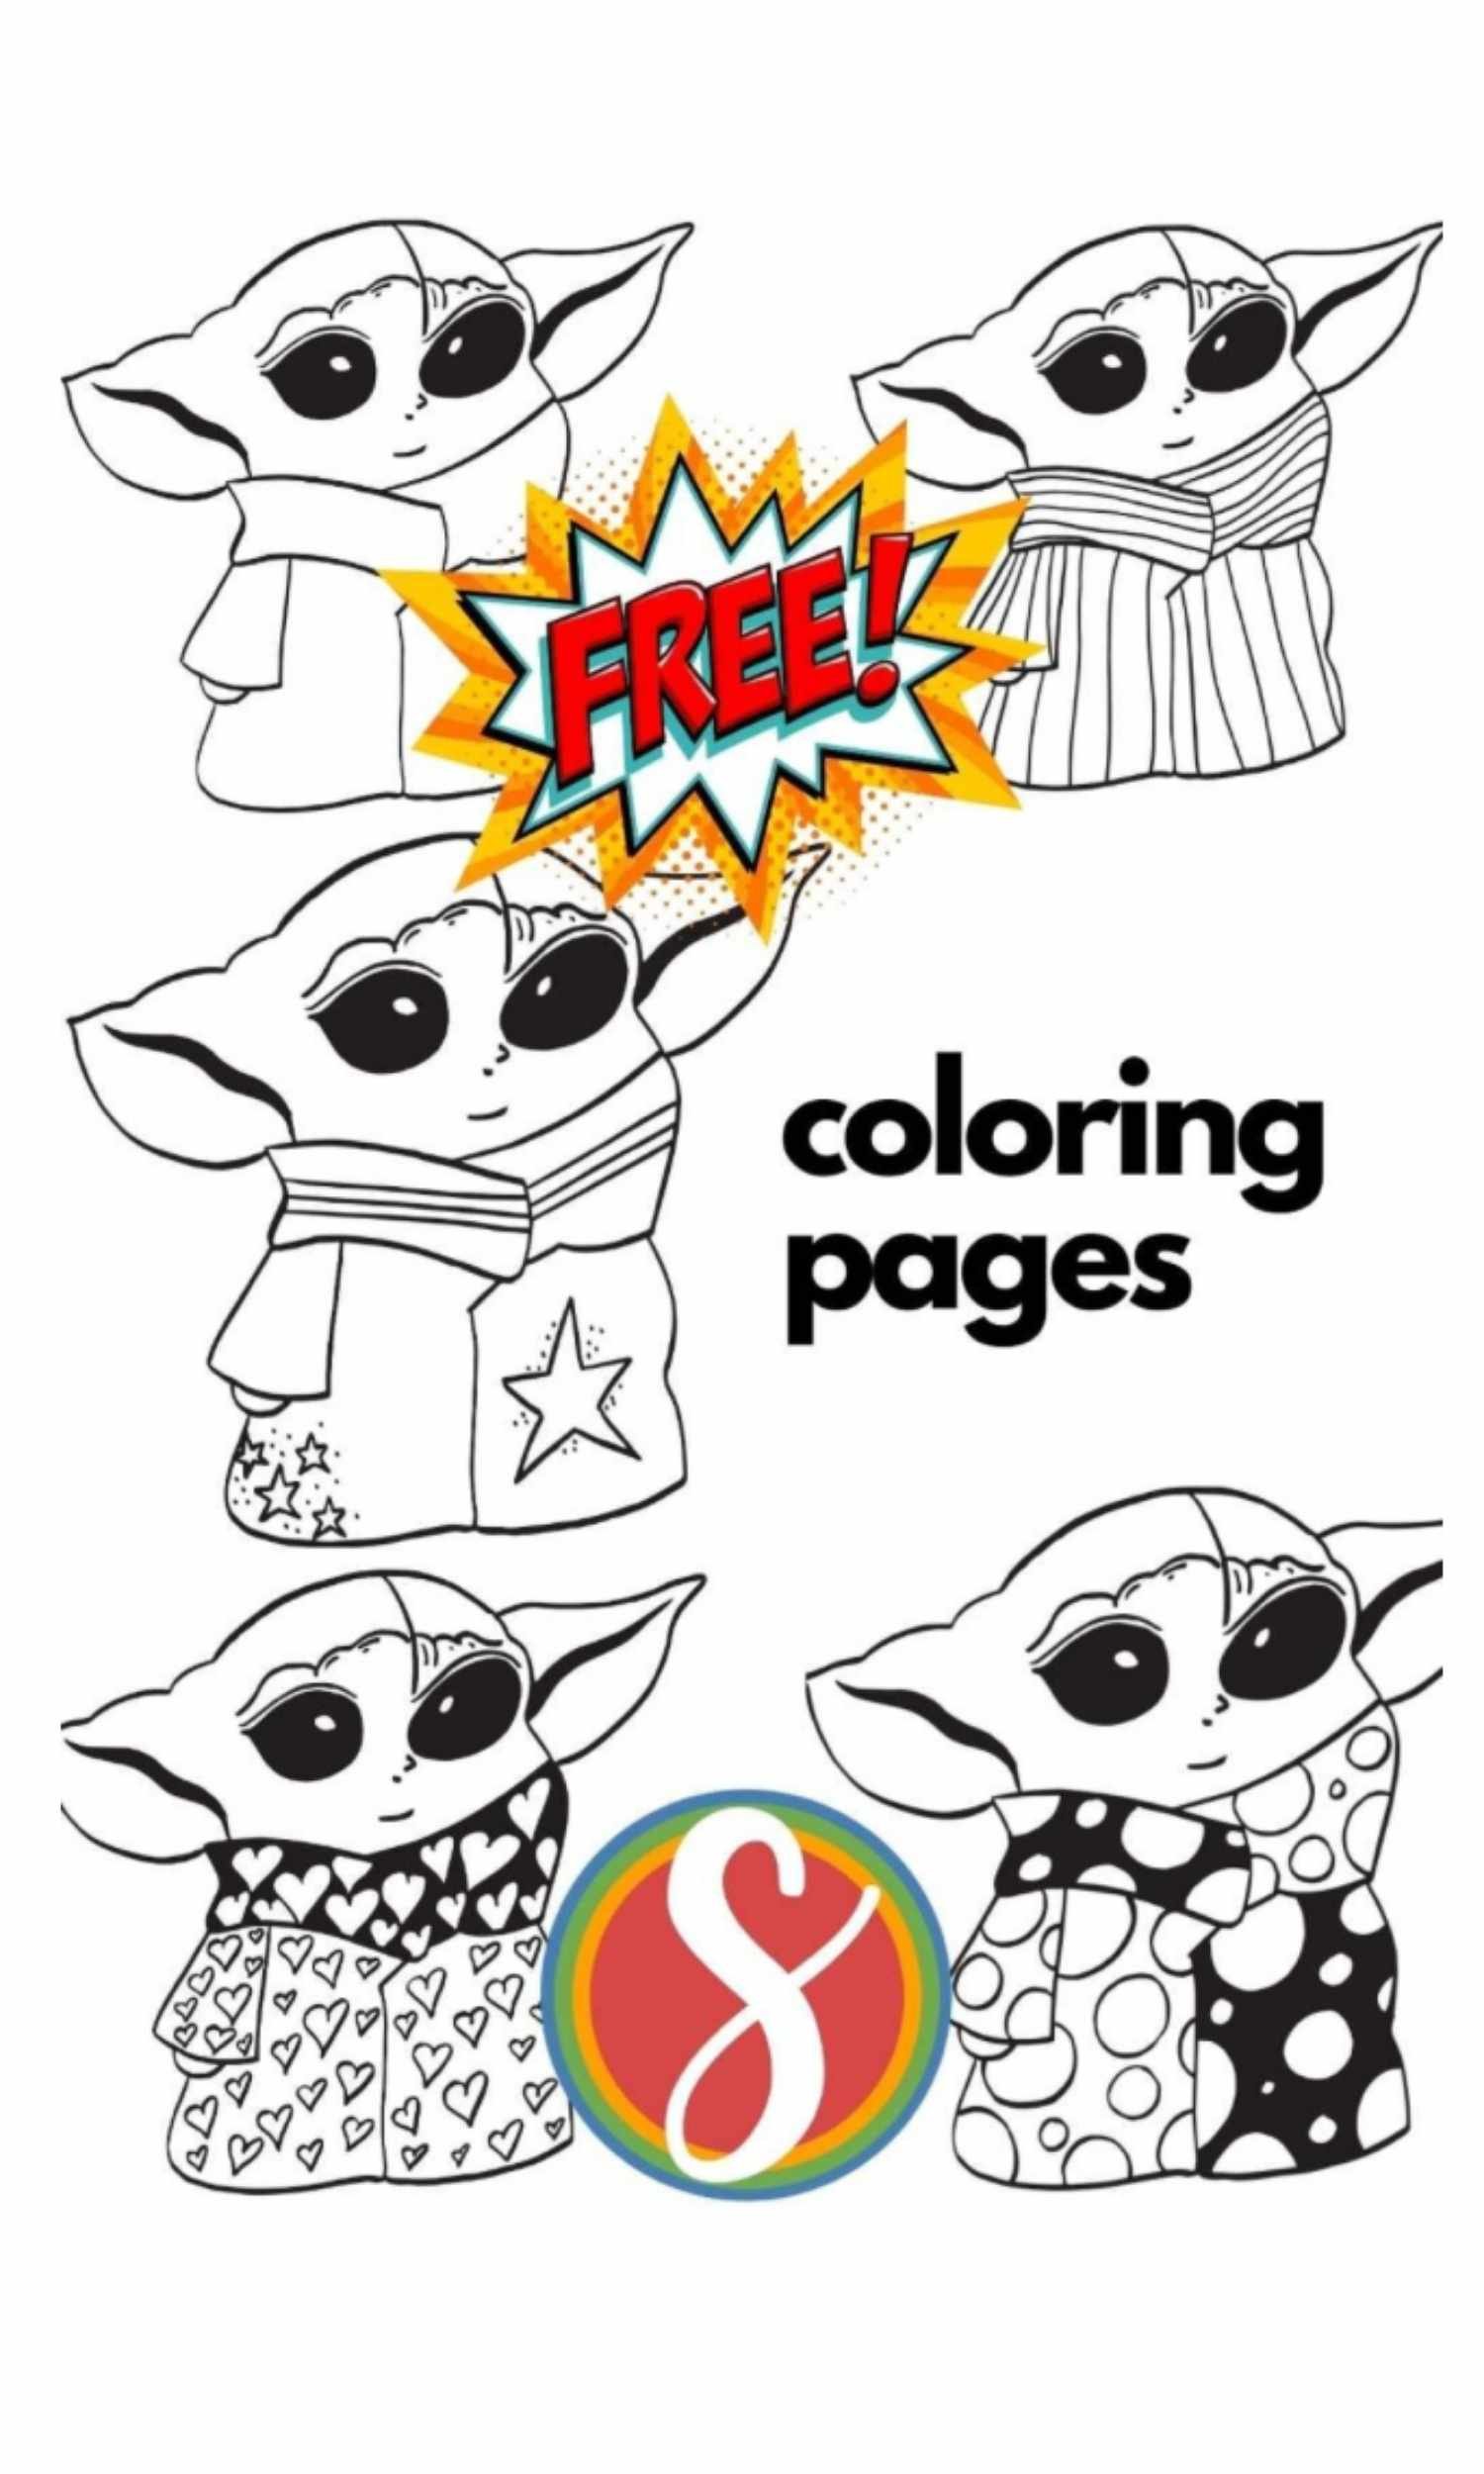 Star wars â free coloring pages â stevie doodles